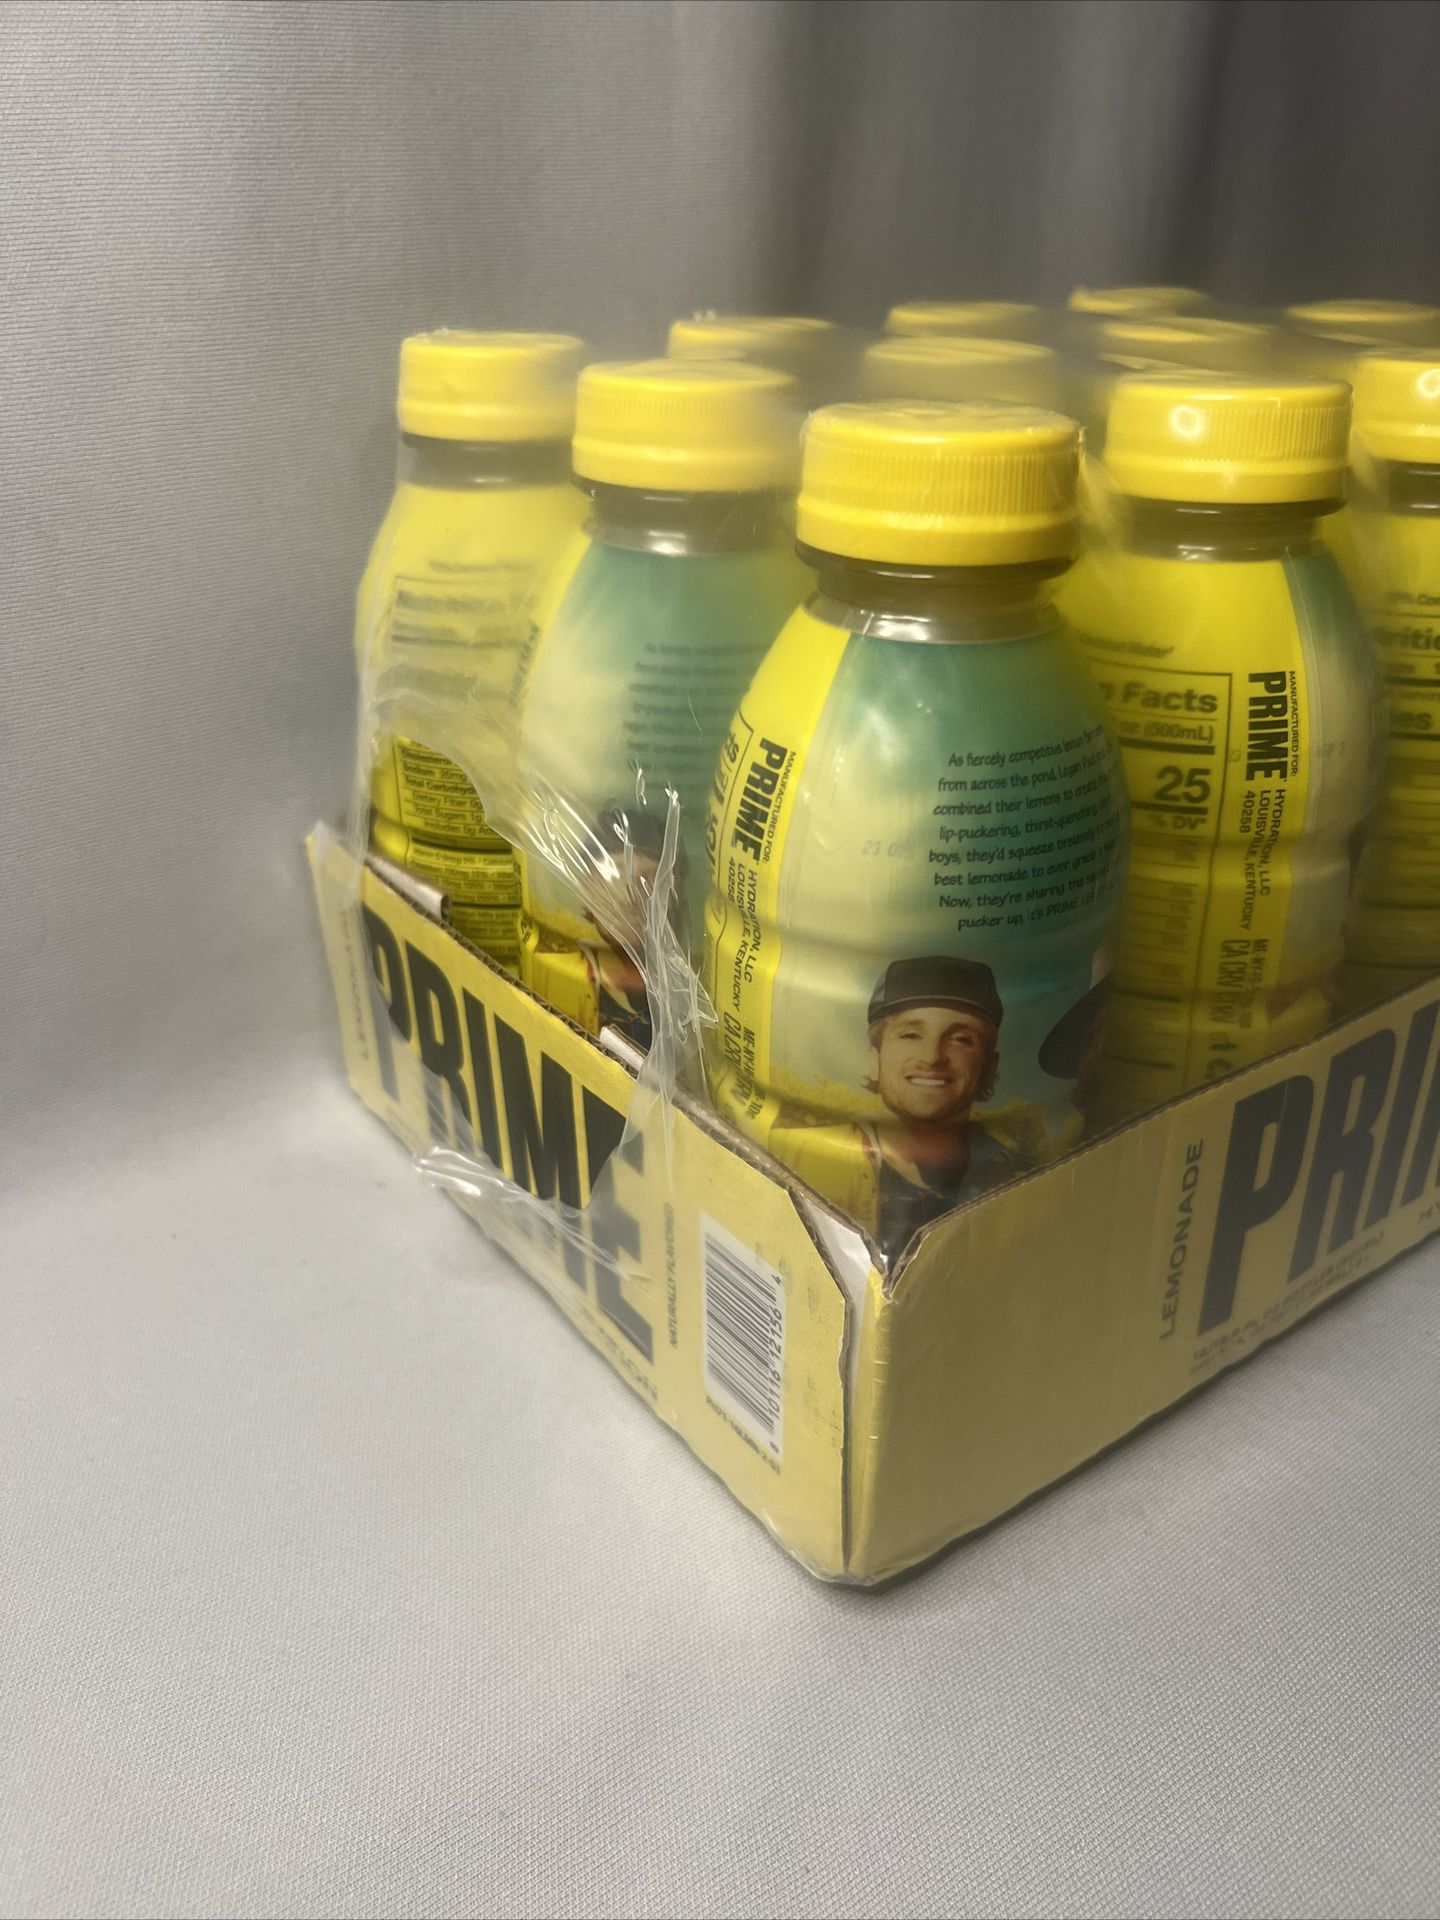 Prime Hydration Venice Beach Exclusive Lemonade (Sealed Slab)